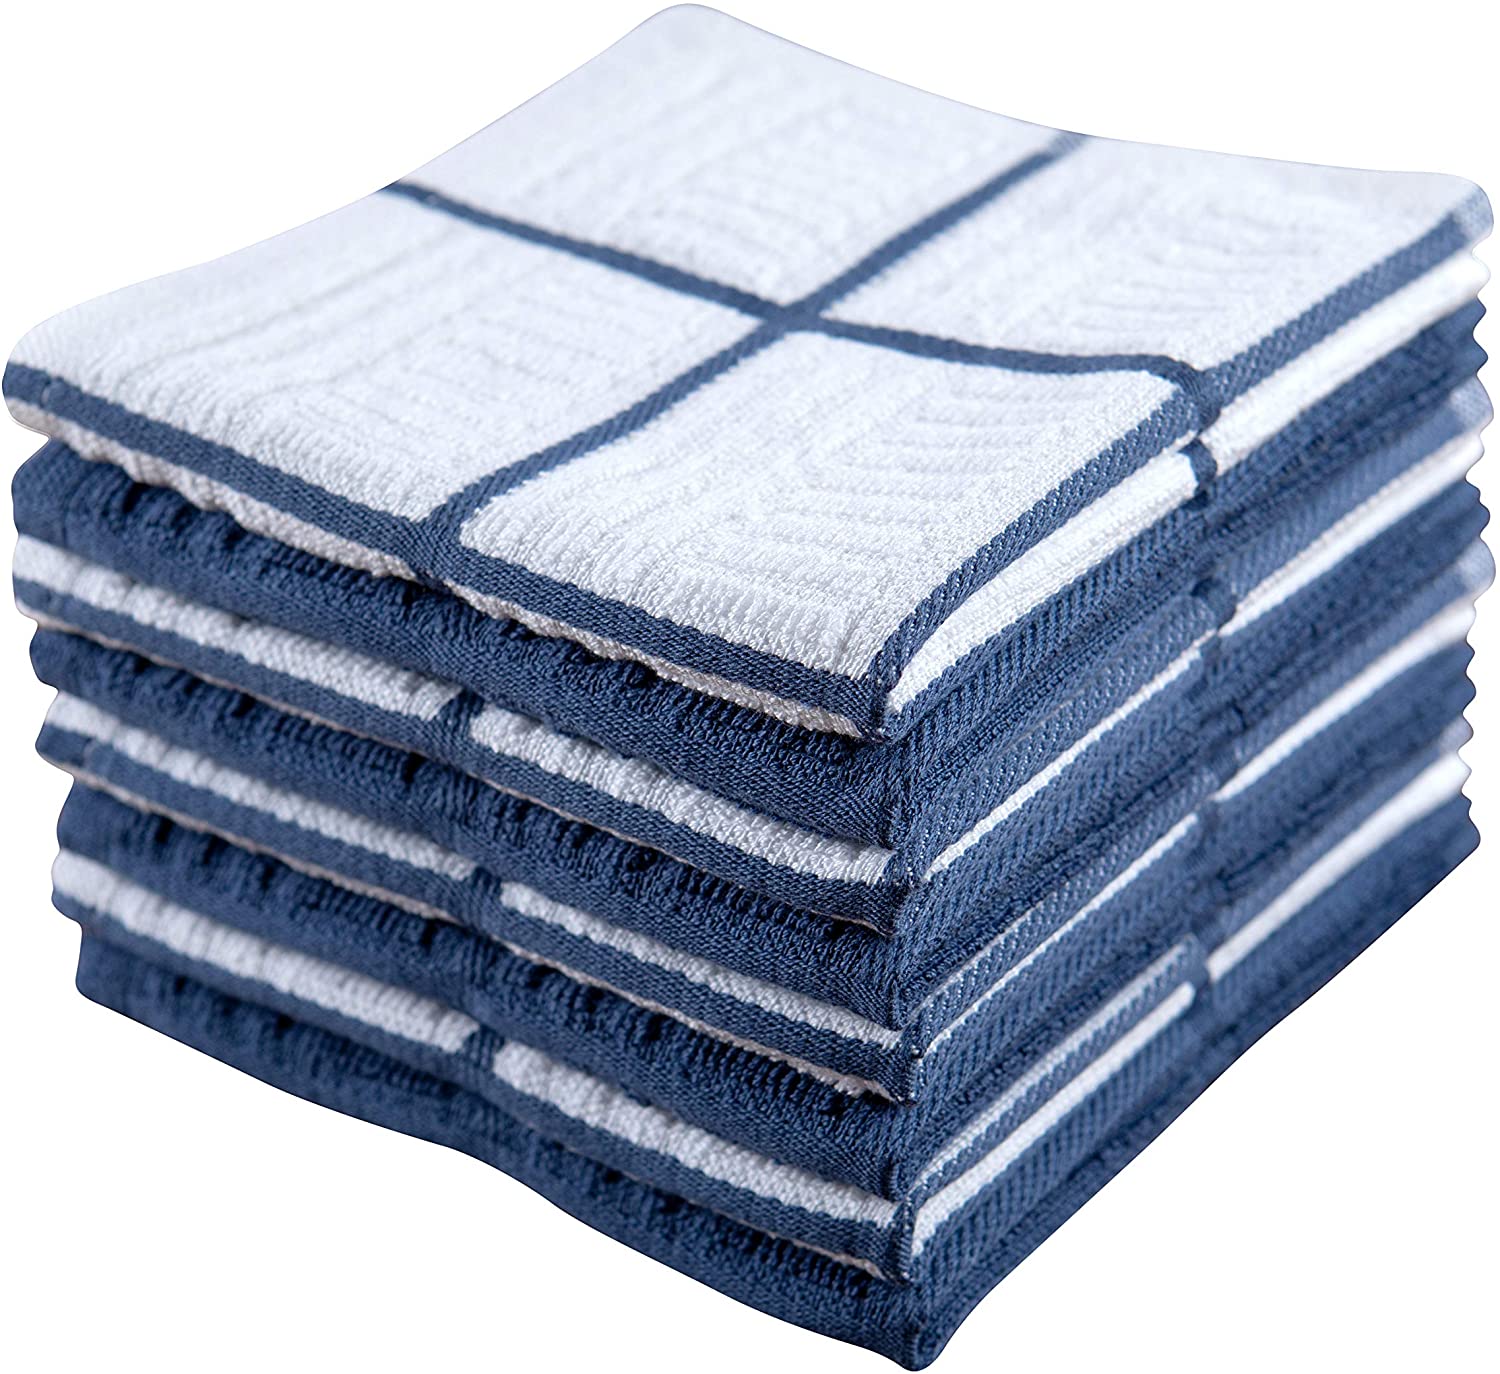 Blue 12x12 Dish Cloths Check Pattern all Cotton